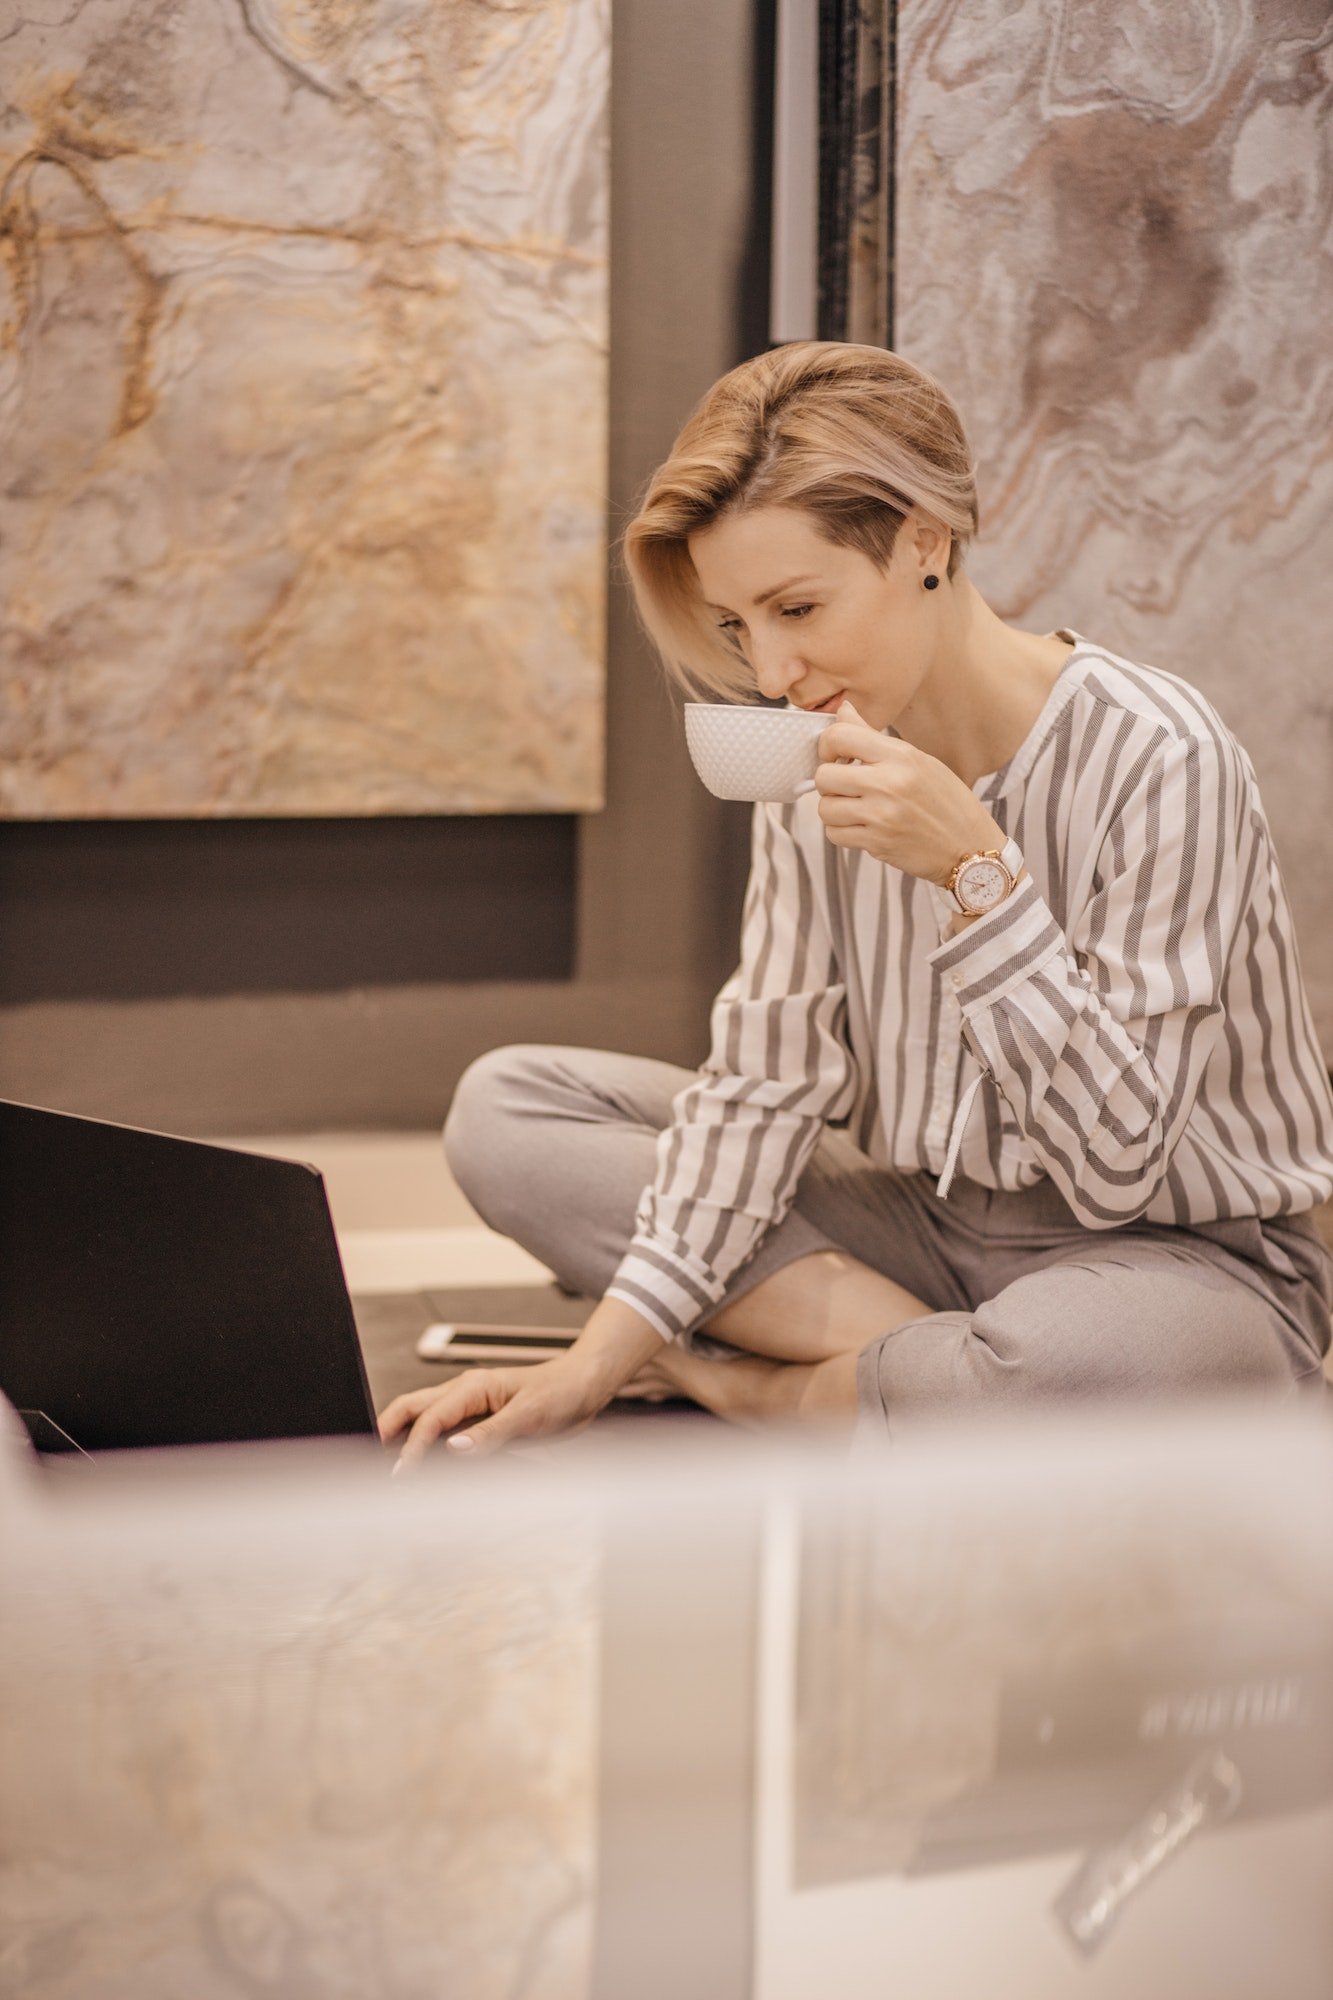 The designer girl works on a laptop computer